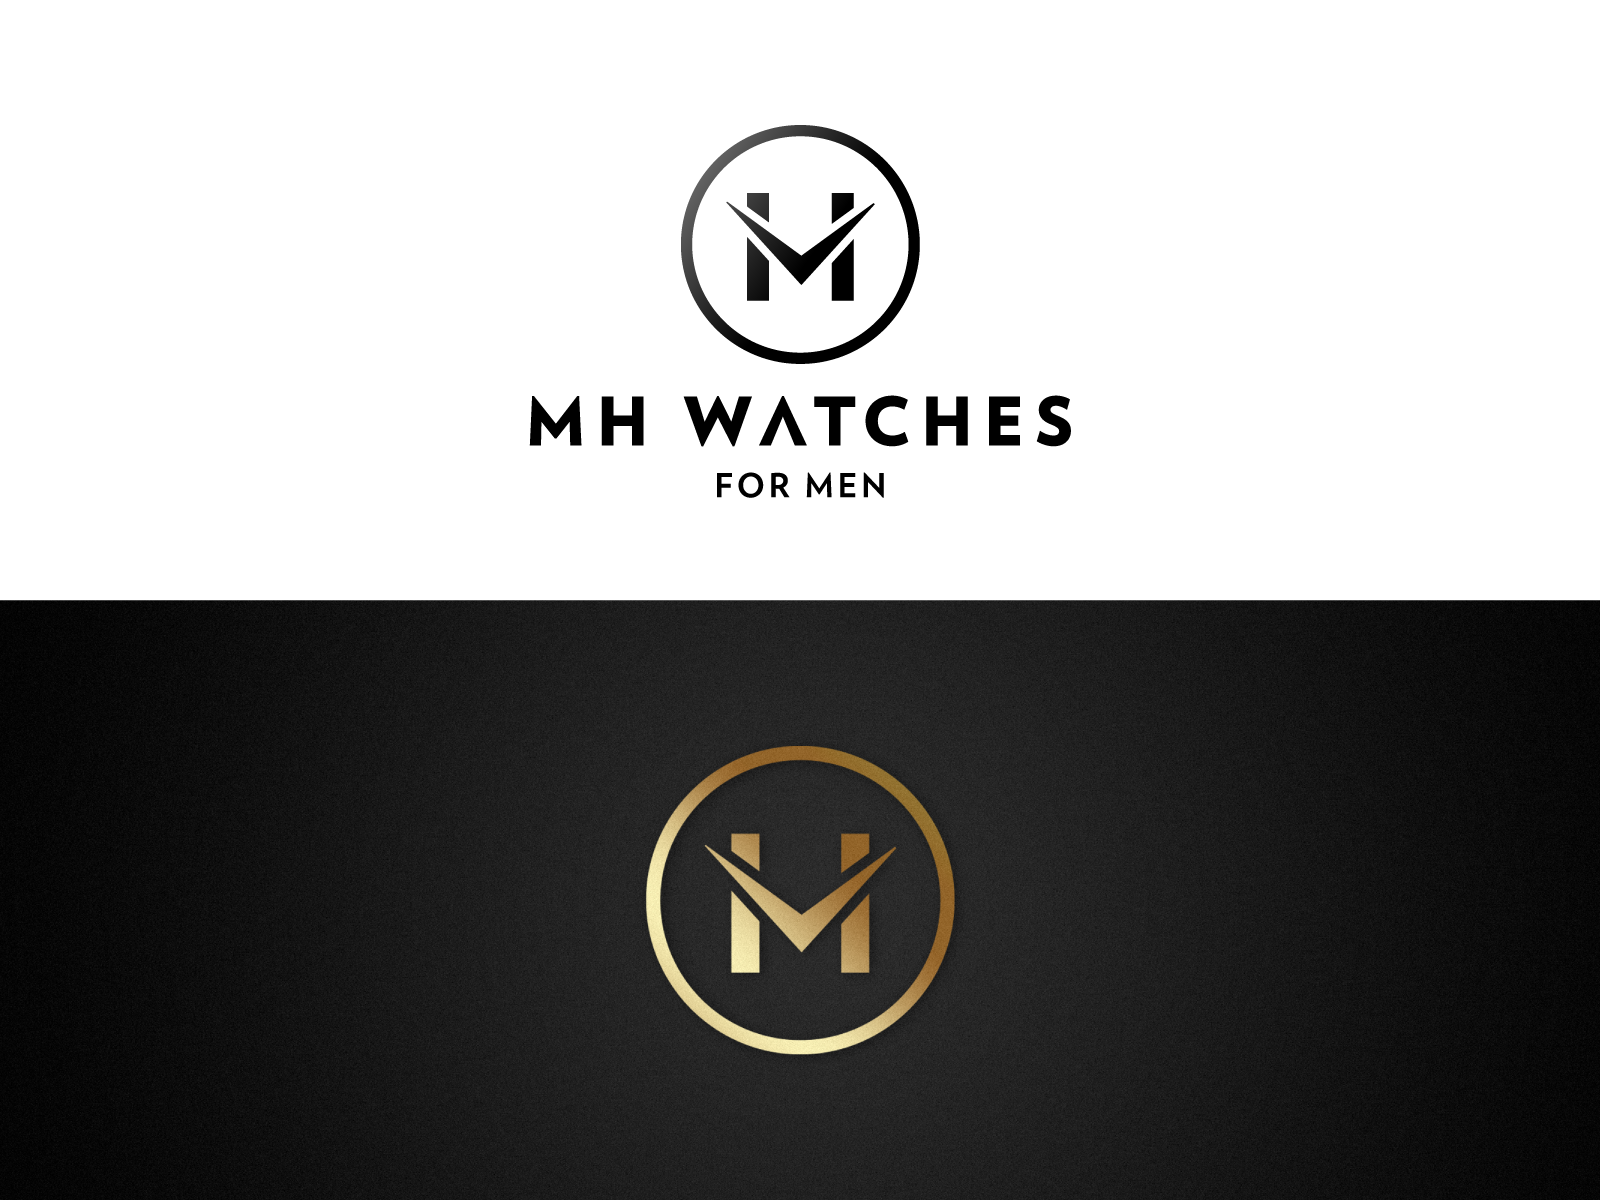 Watch Company Logos